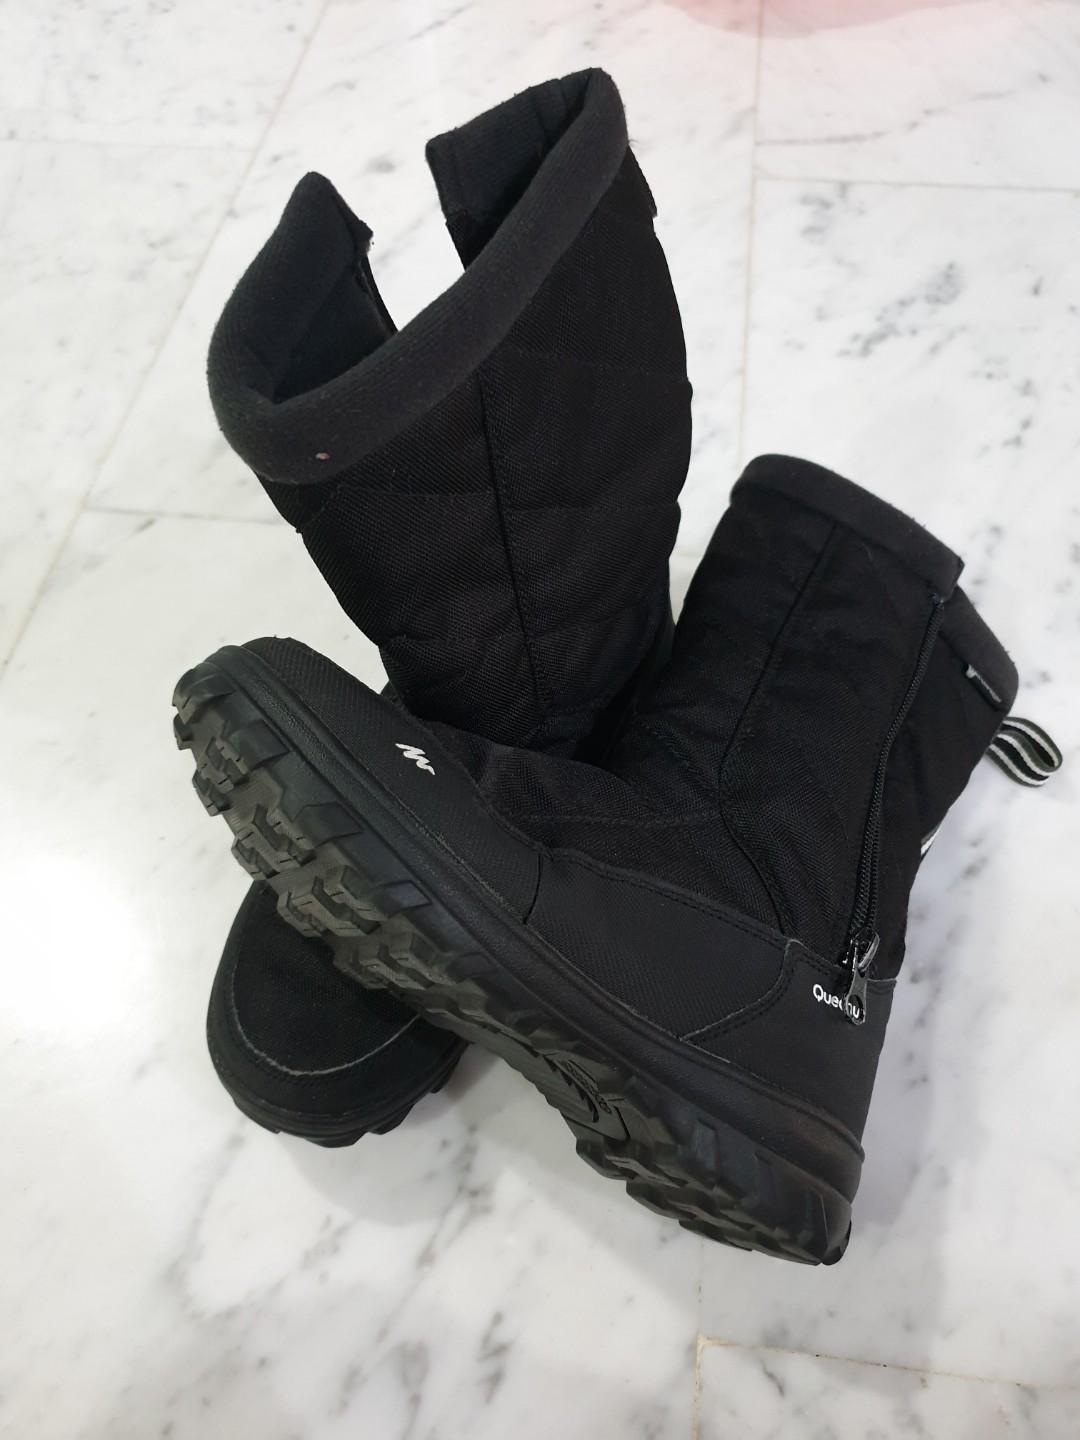 decathlon kids snow boots